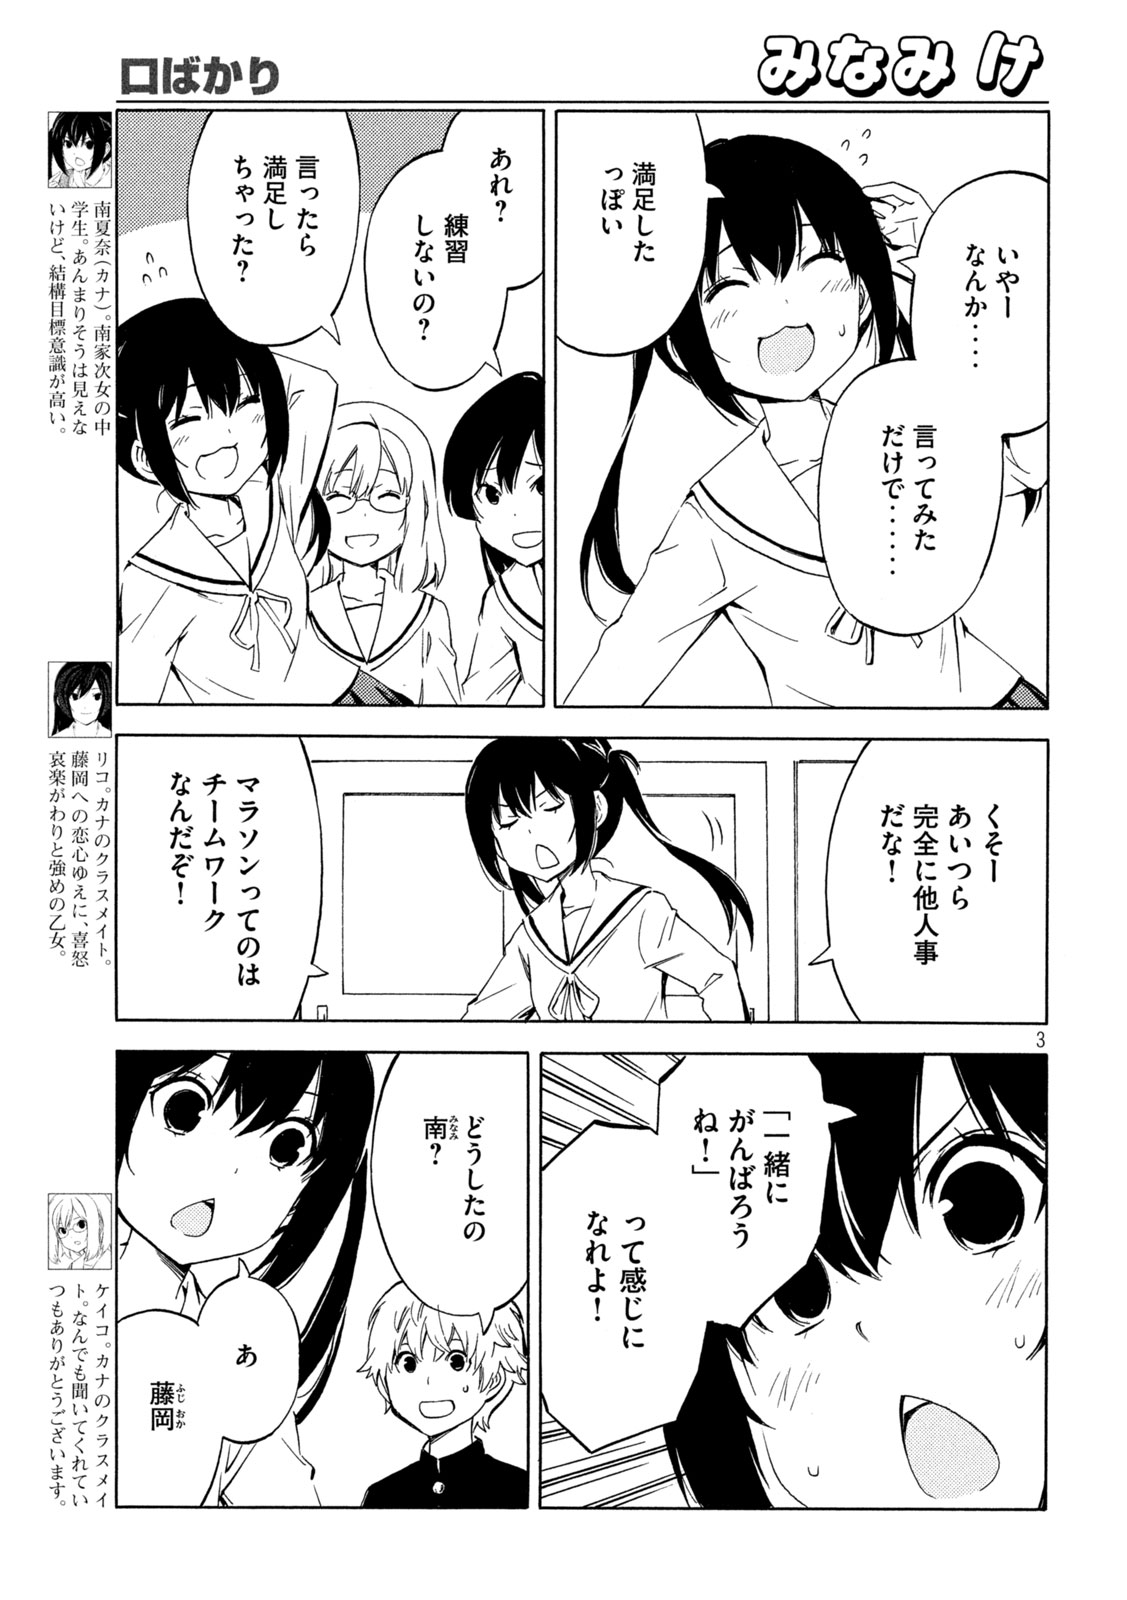 Minami-ke - Chapter 480 - Page 3